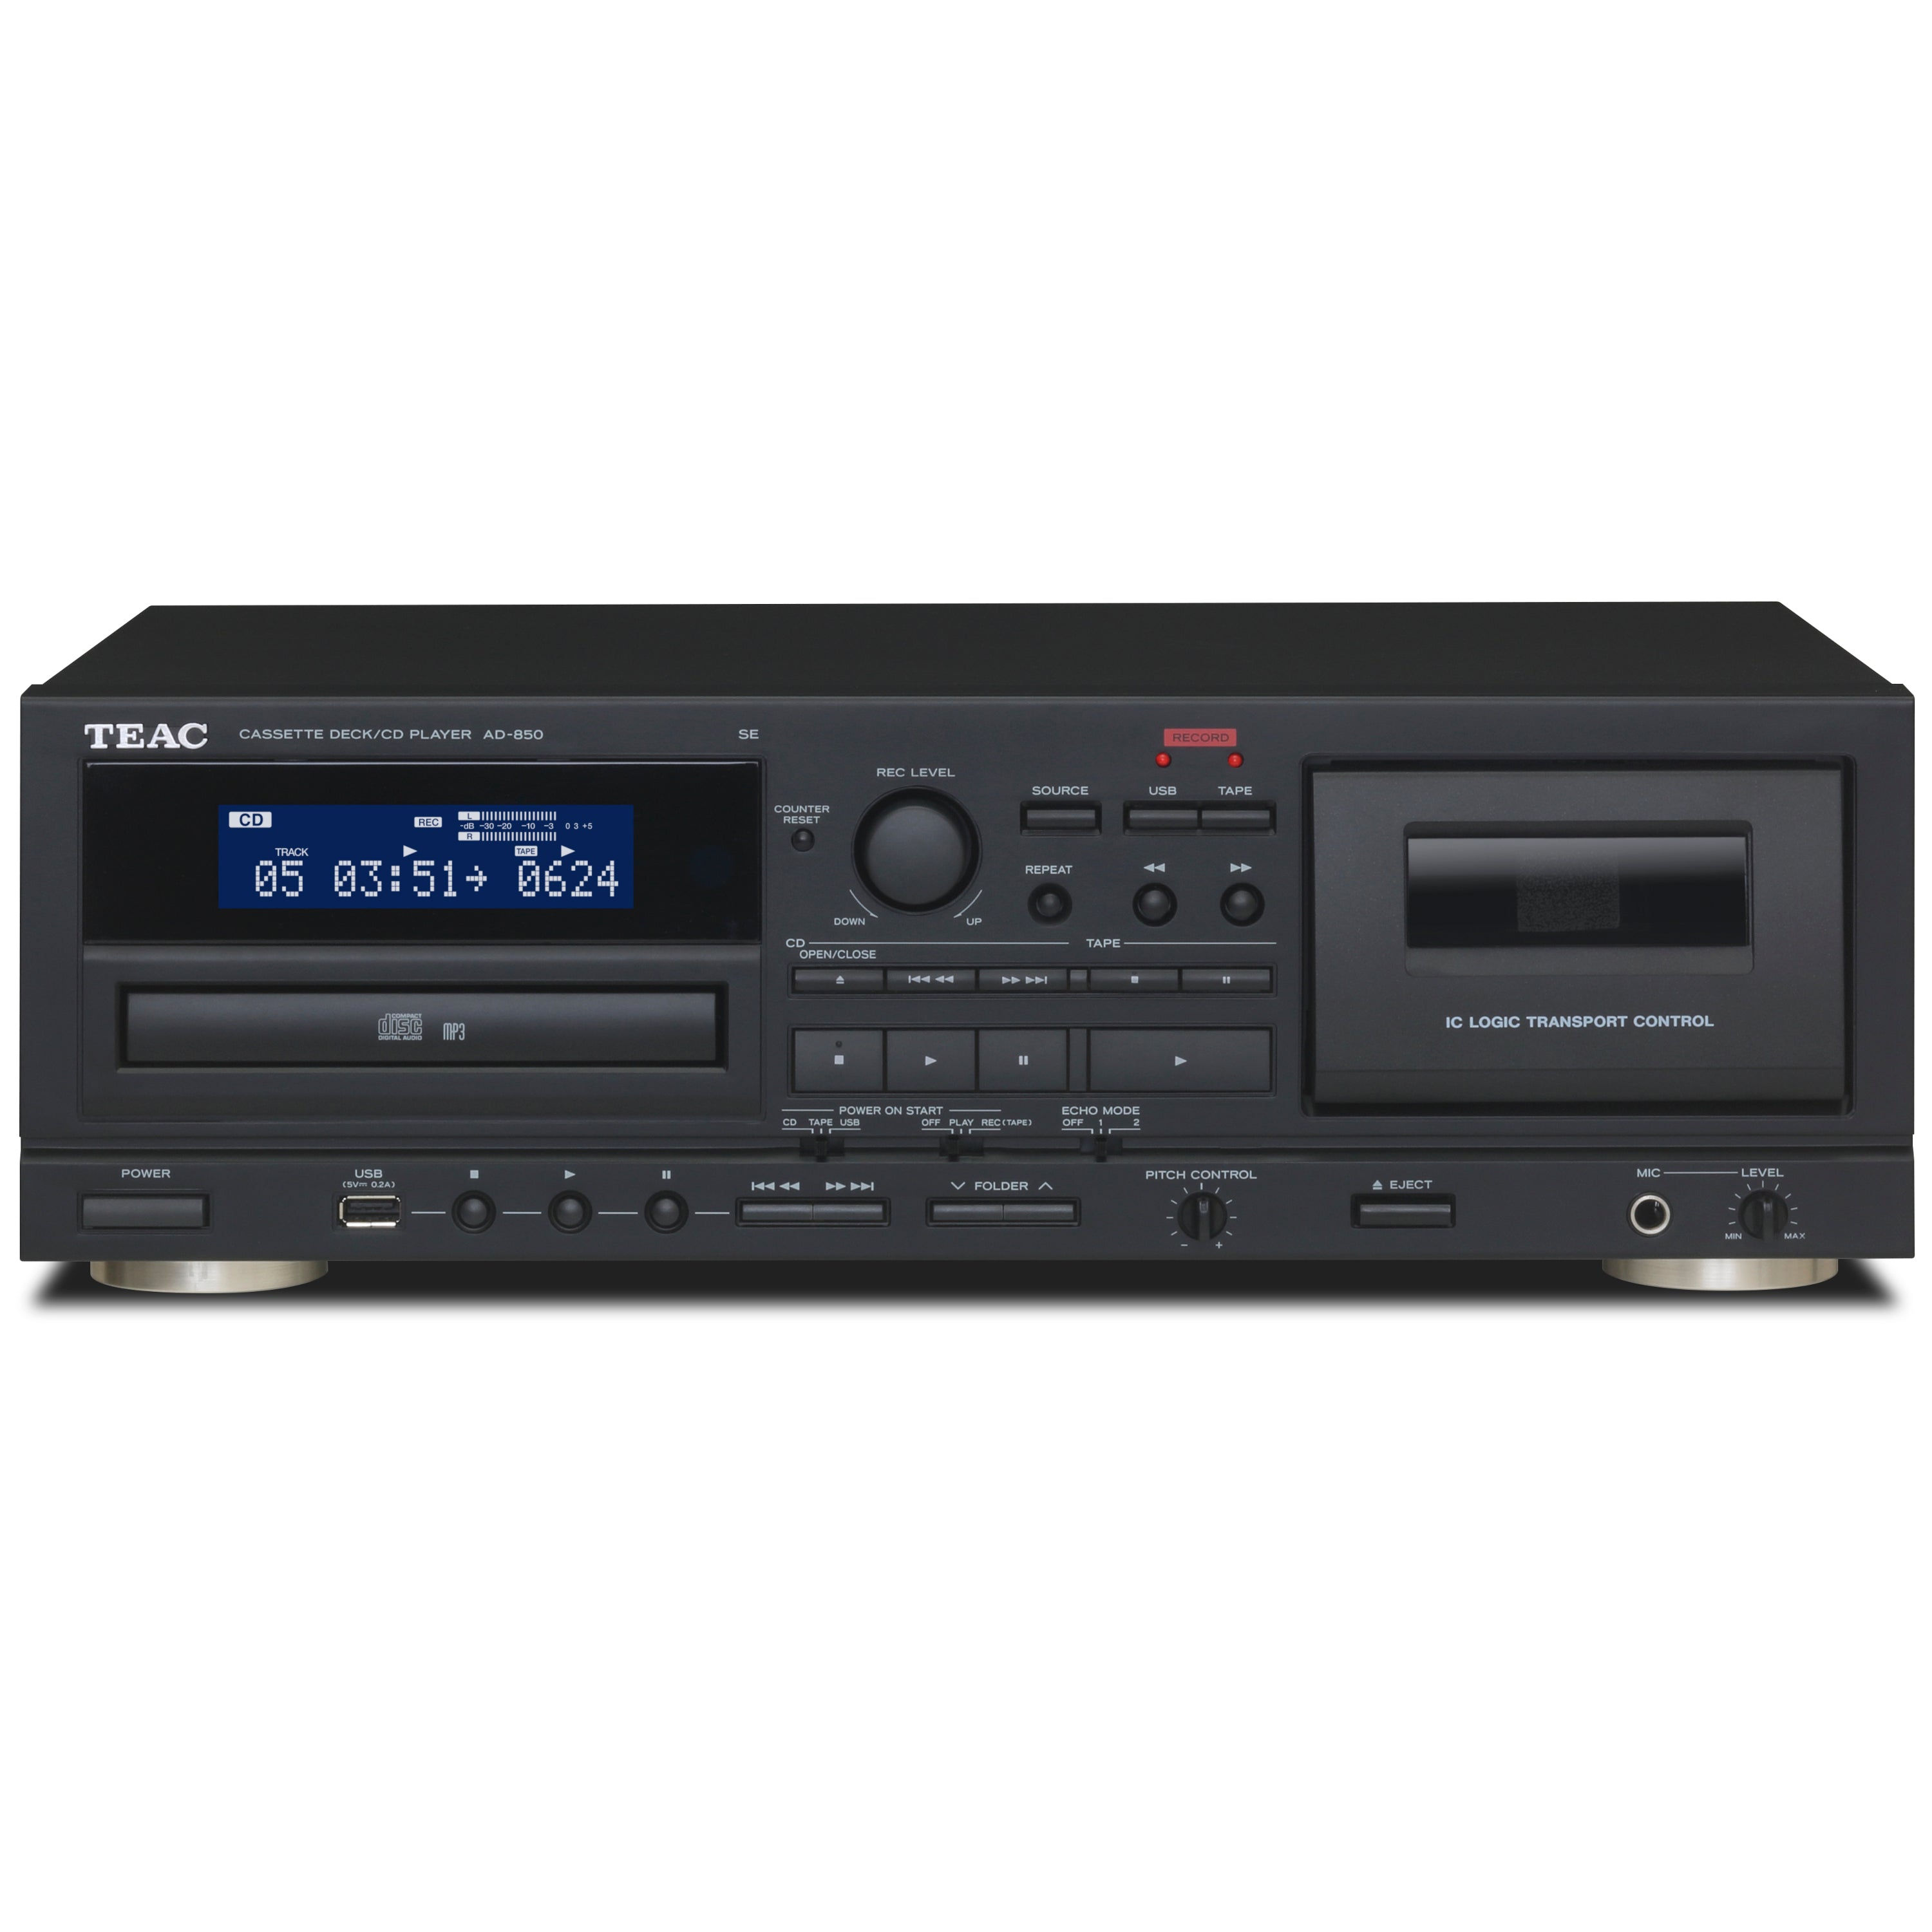 TEAC AD-850-SE Cassette Deck / CD Player